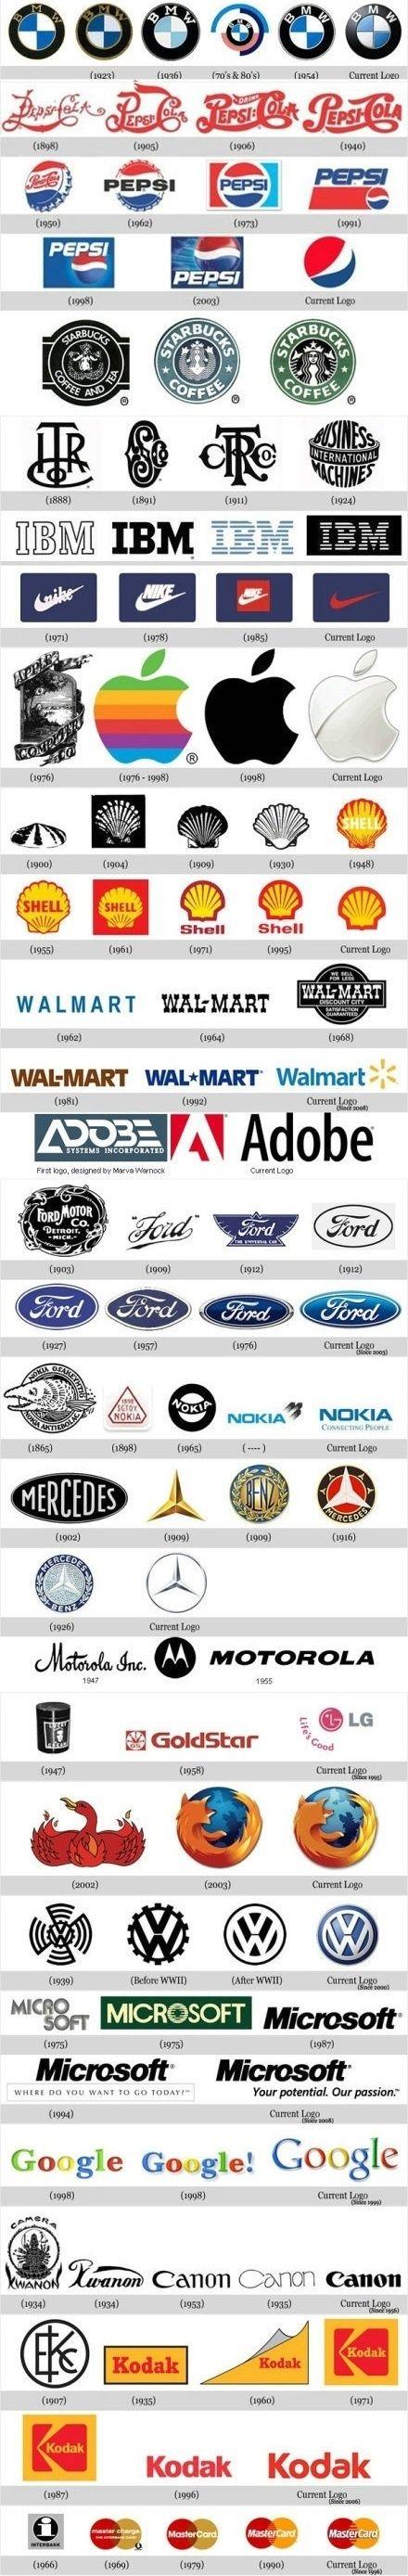 Cool Old Company Logo - Brand logos evolution. Pretty cool evolution. HooftZakelijk